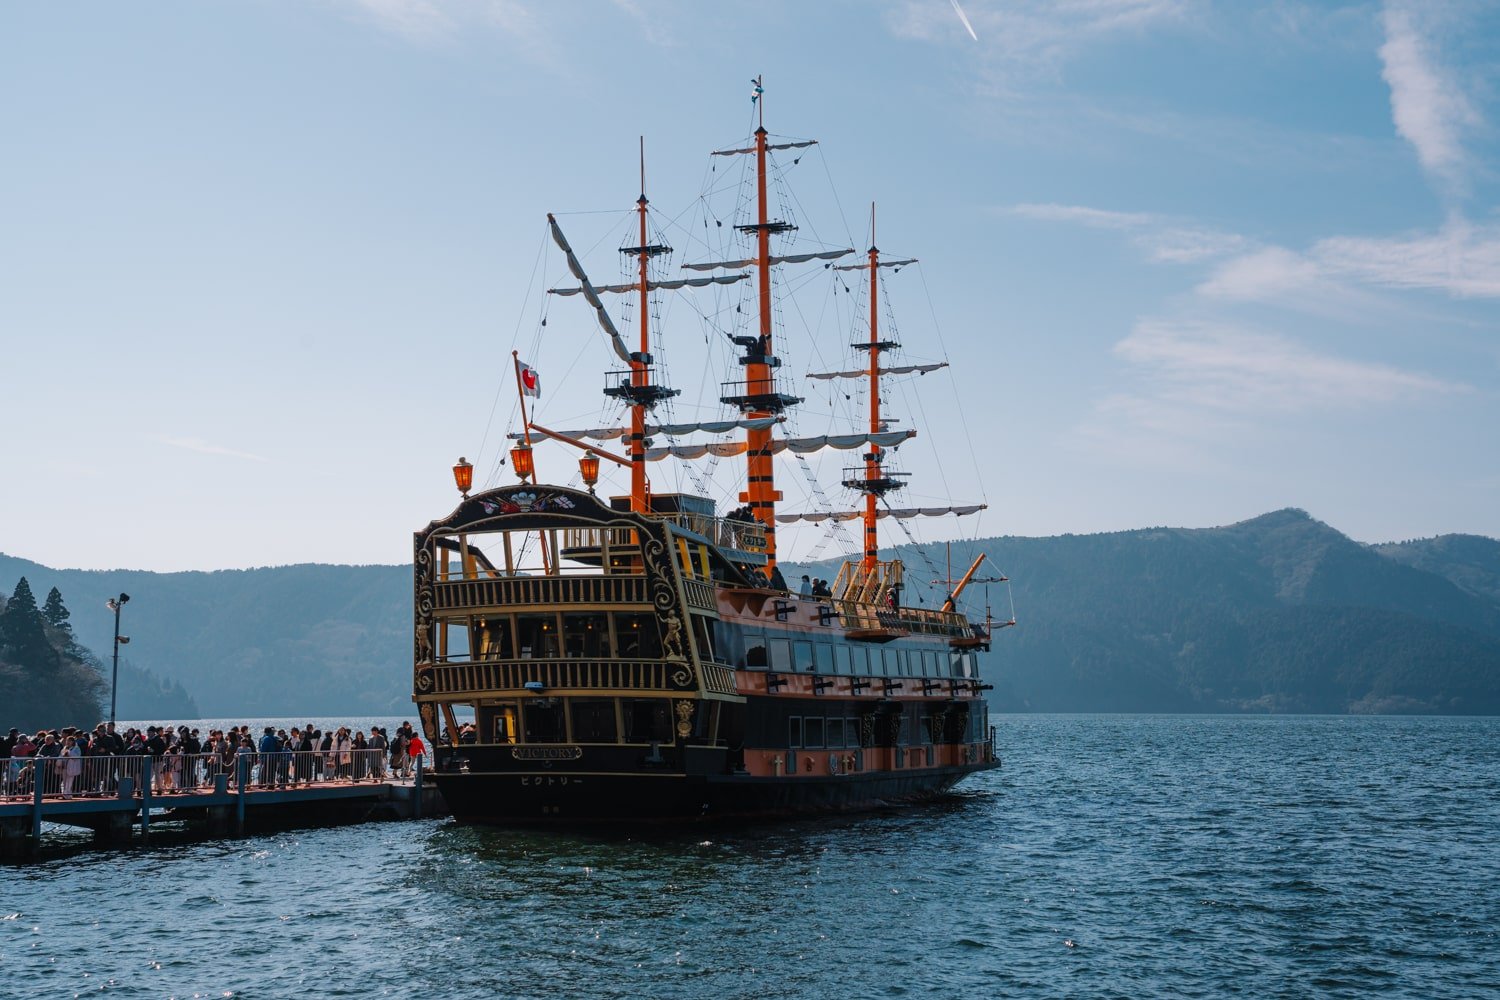 Tourists wait to board the pirate-theme Lake Ashi boat cruise in Hakone, Japan.